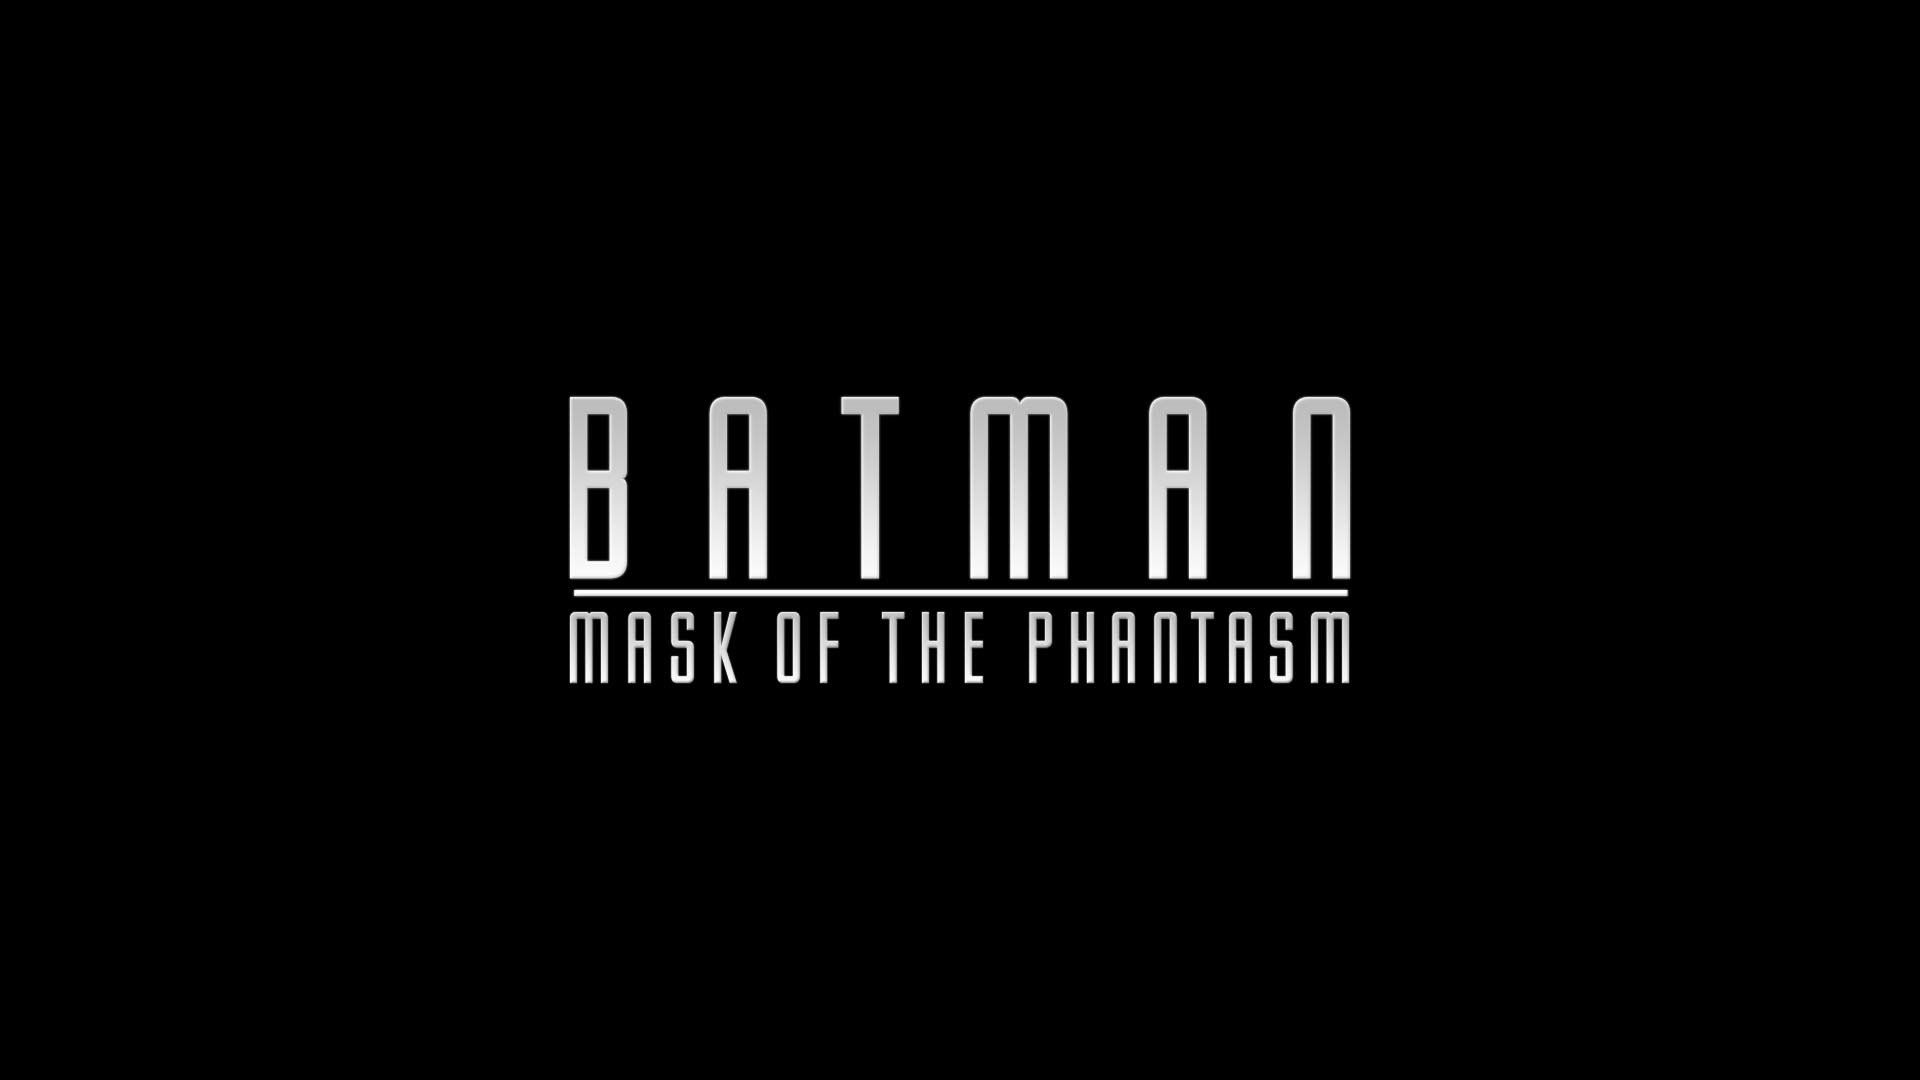 Batman: Mask of the Phantasm HD Wallpaper and Background Image